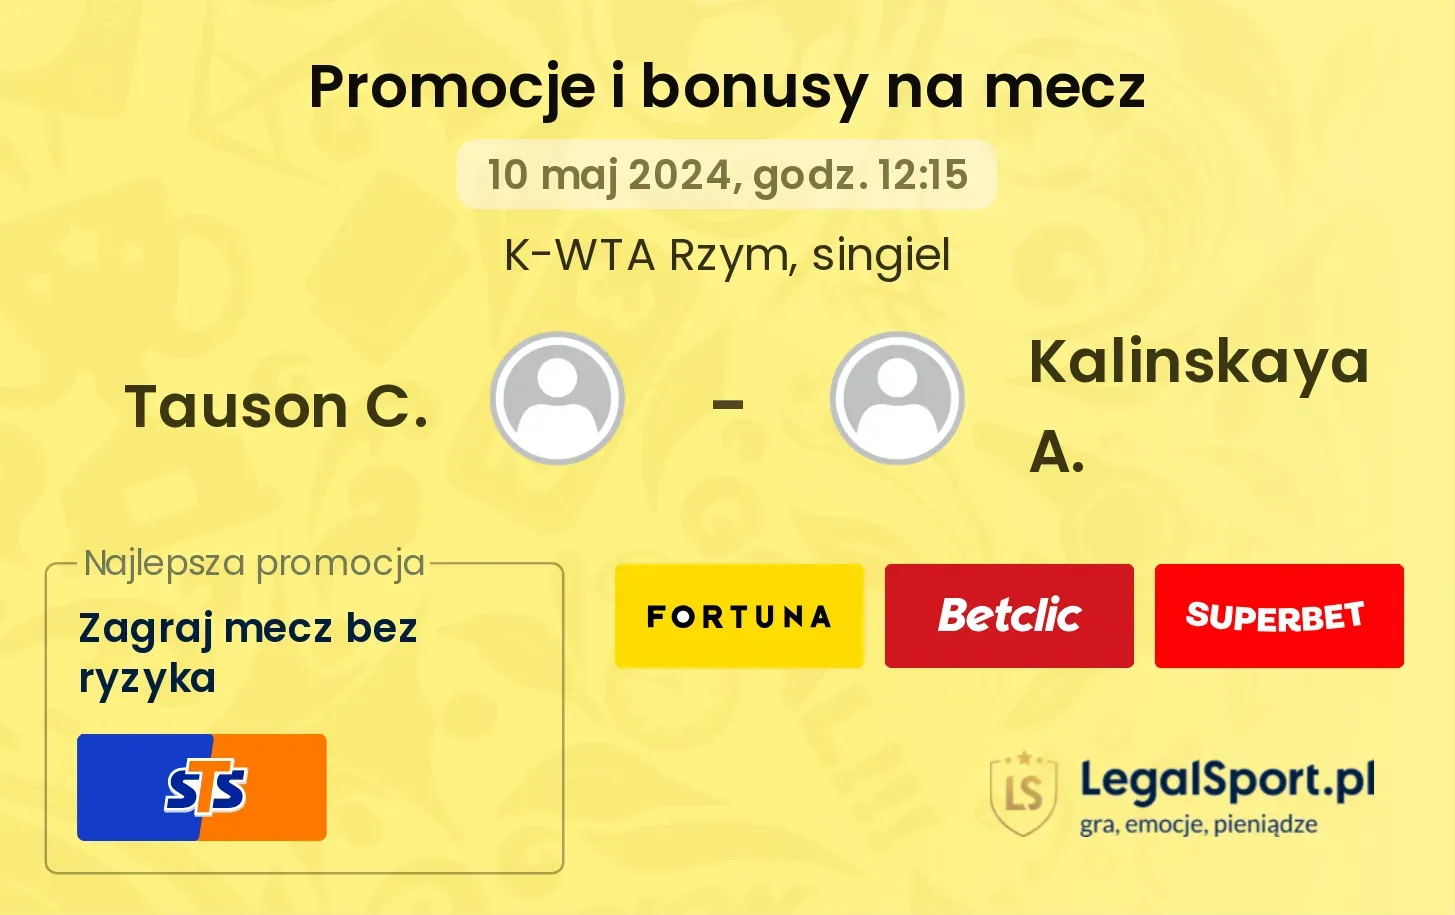 Tauson C. - Kalinskaya A. promocje bonusy na mecz